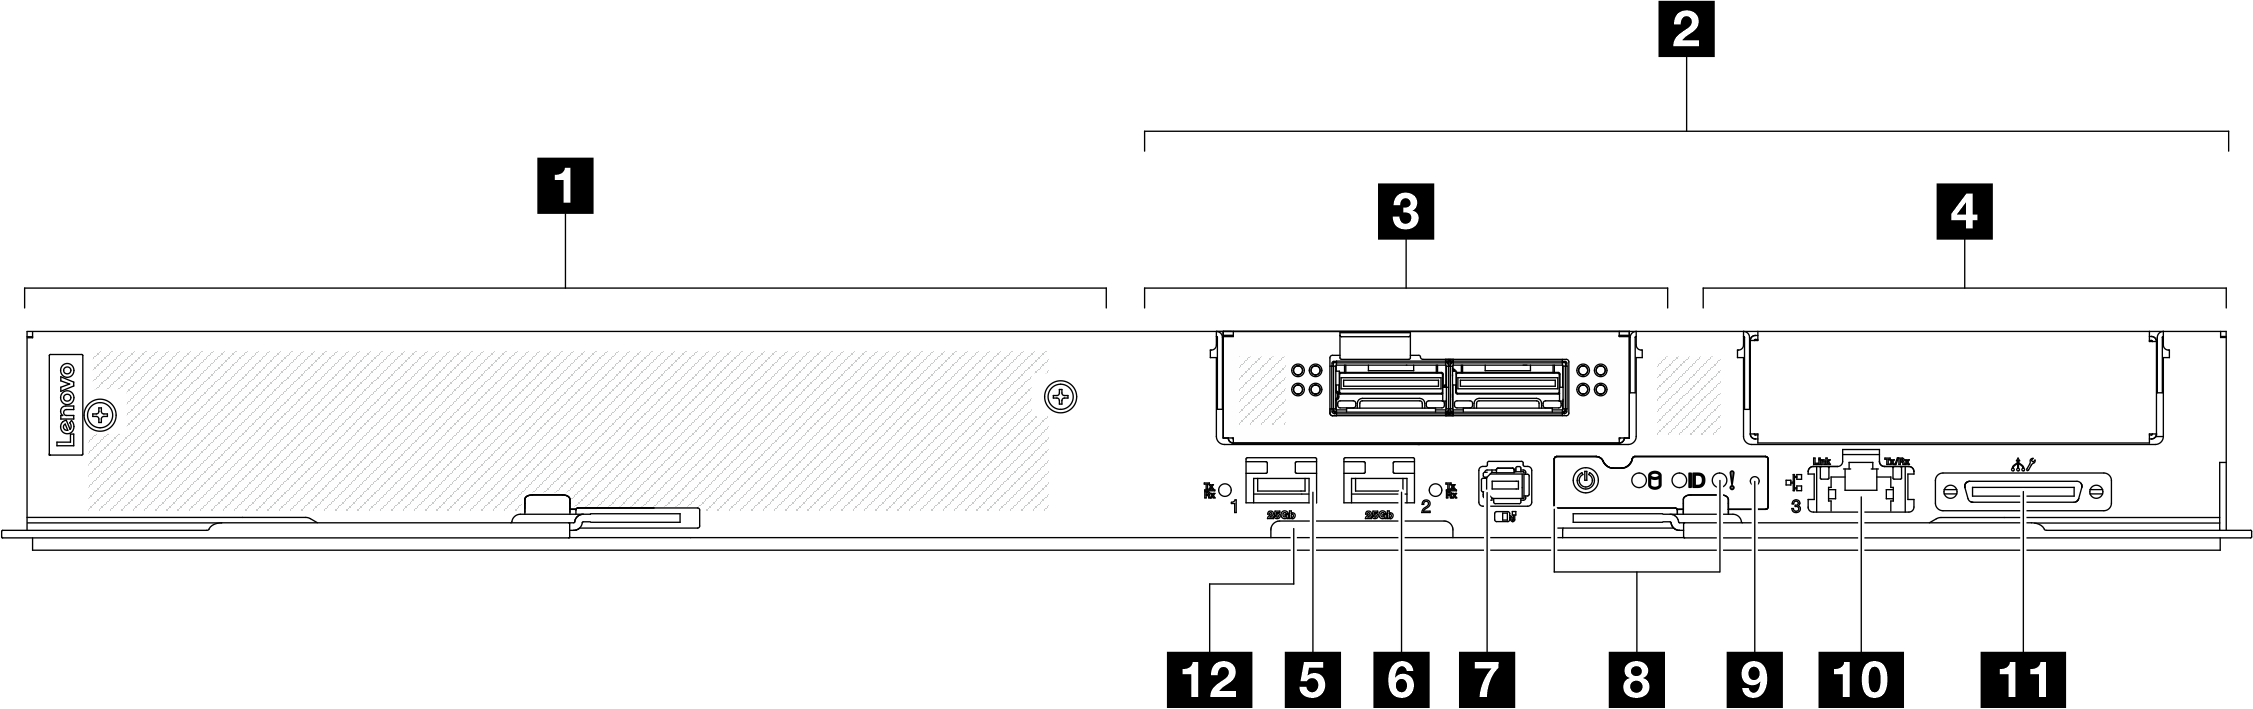 SD665-N V3 tray